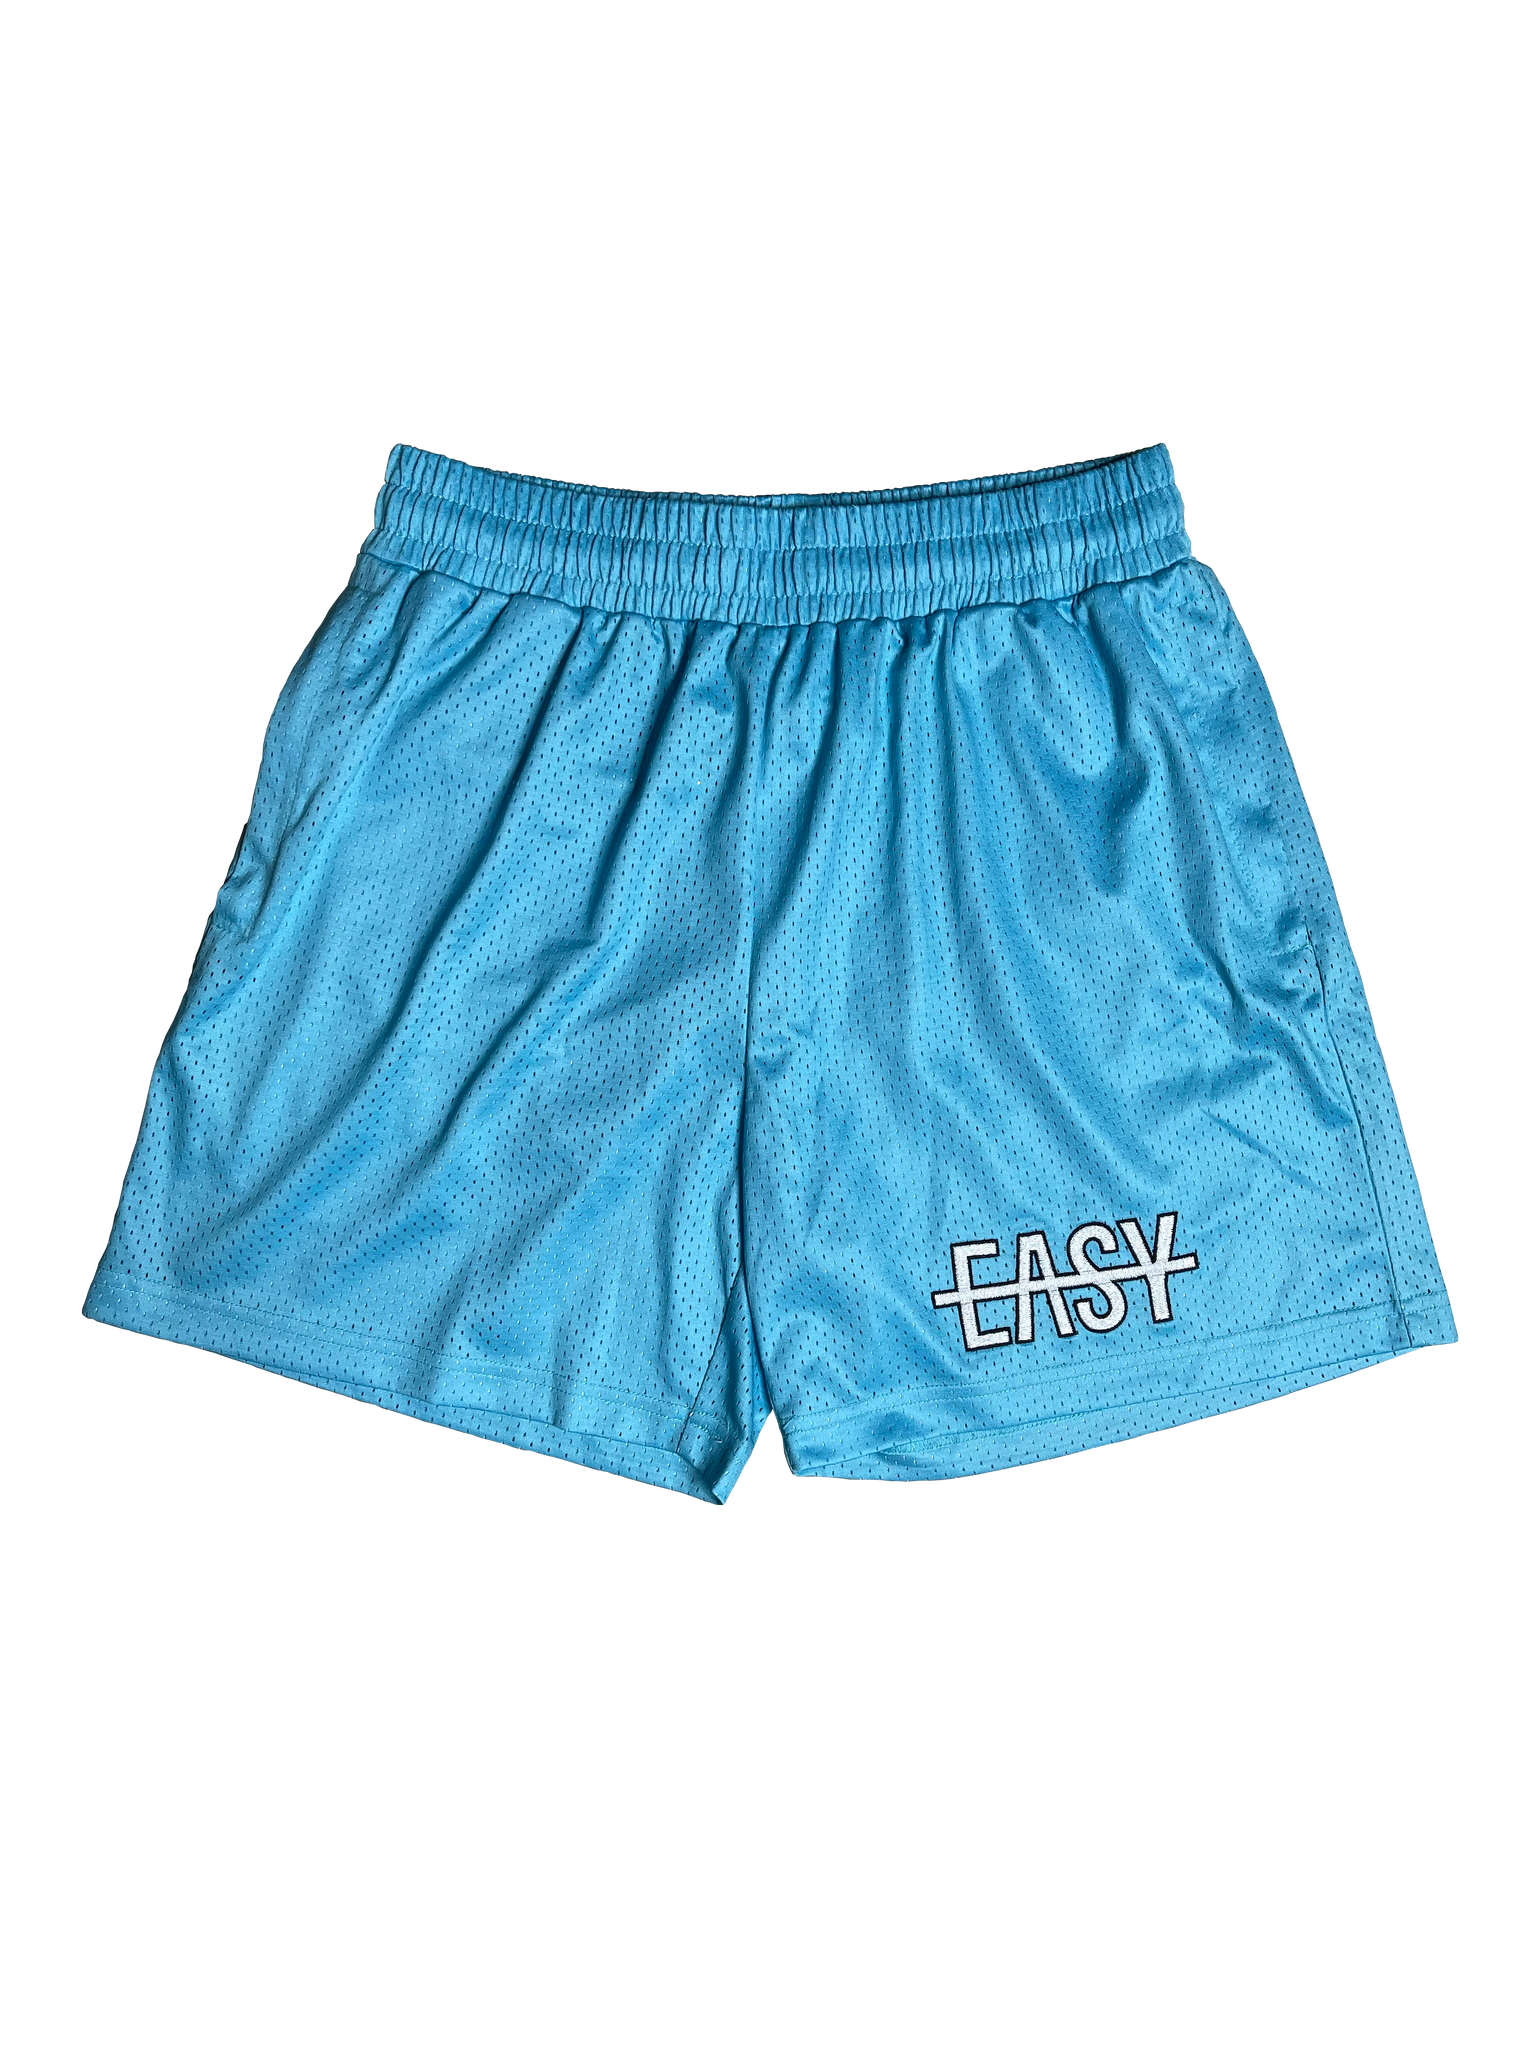 Easy "Baby Blue" Shorts